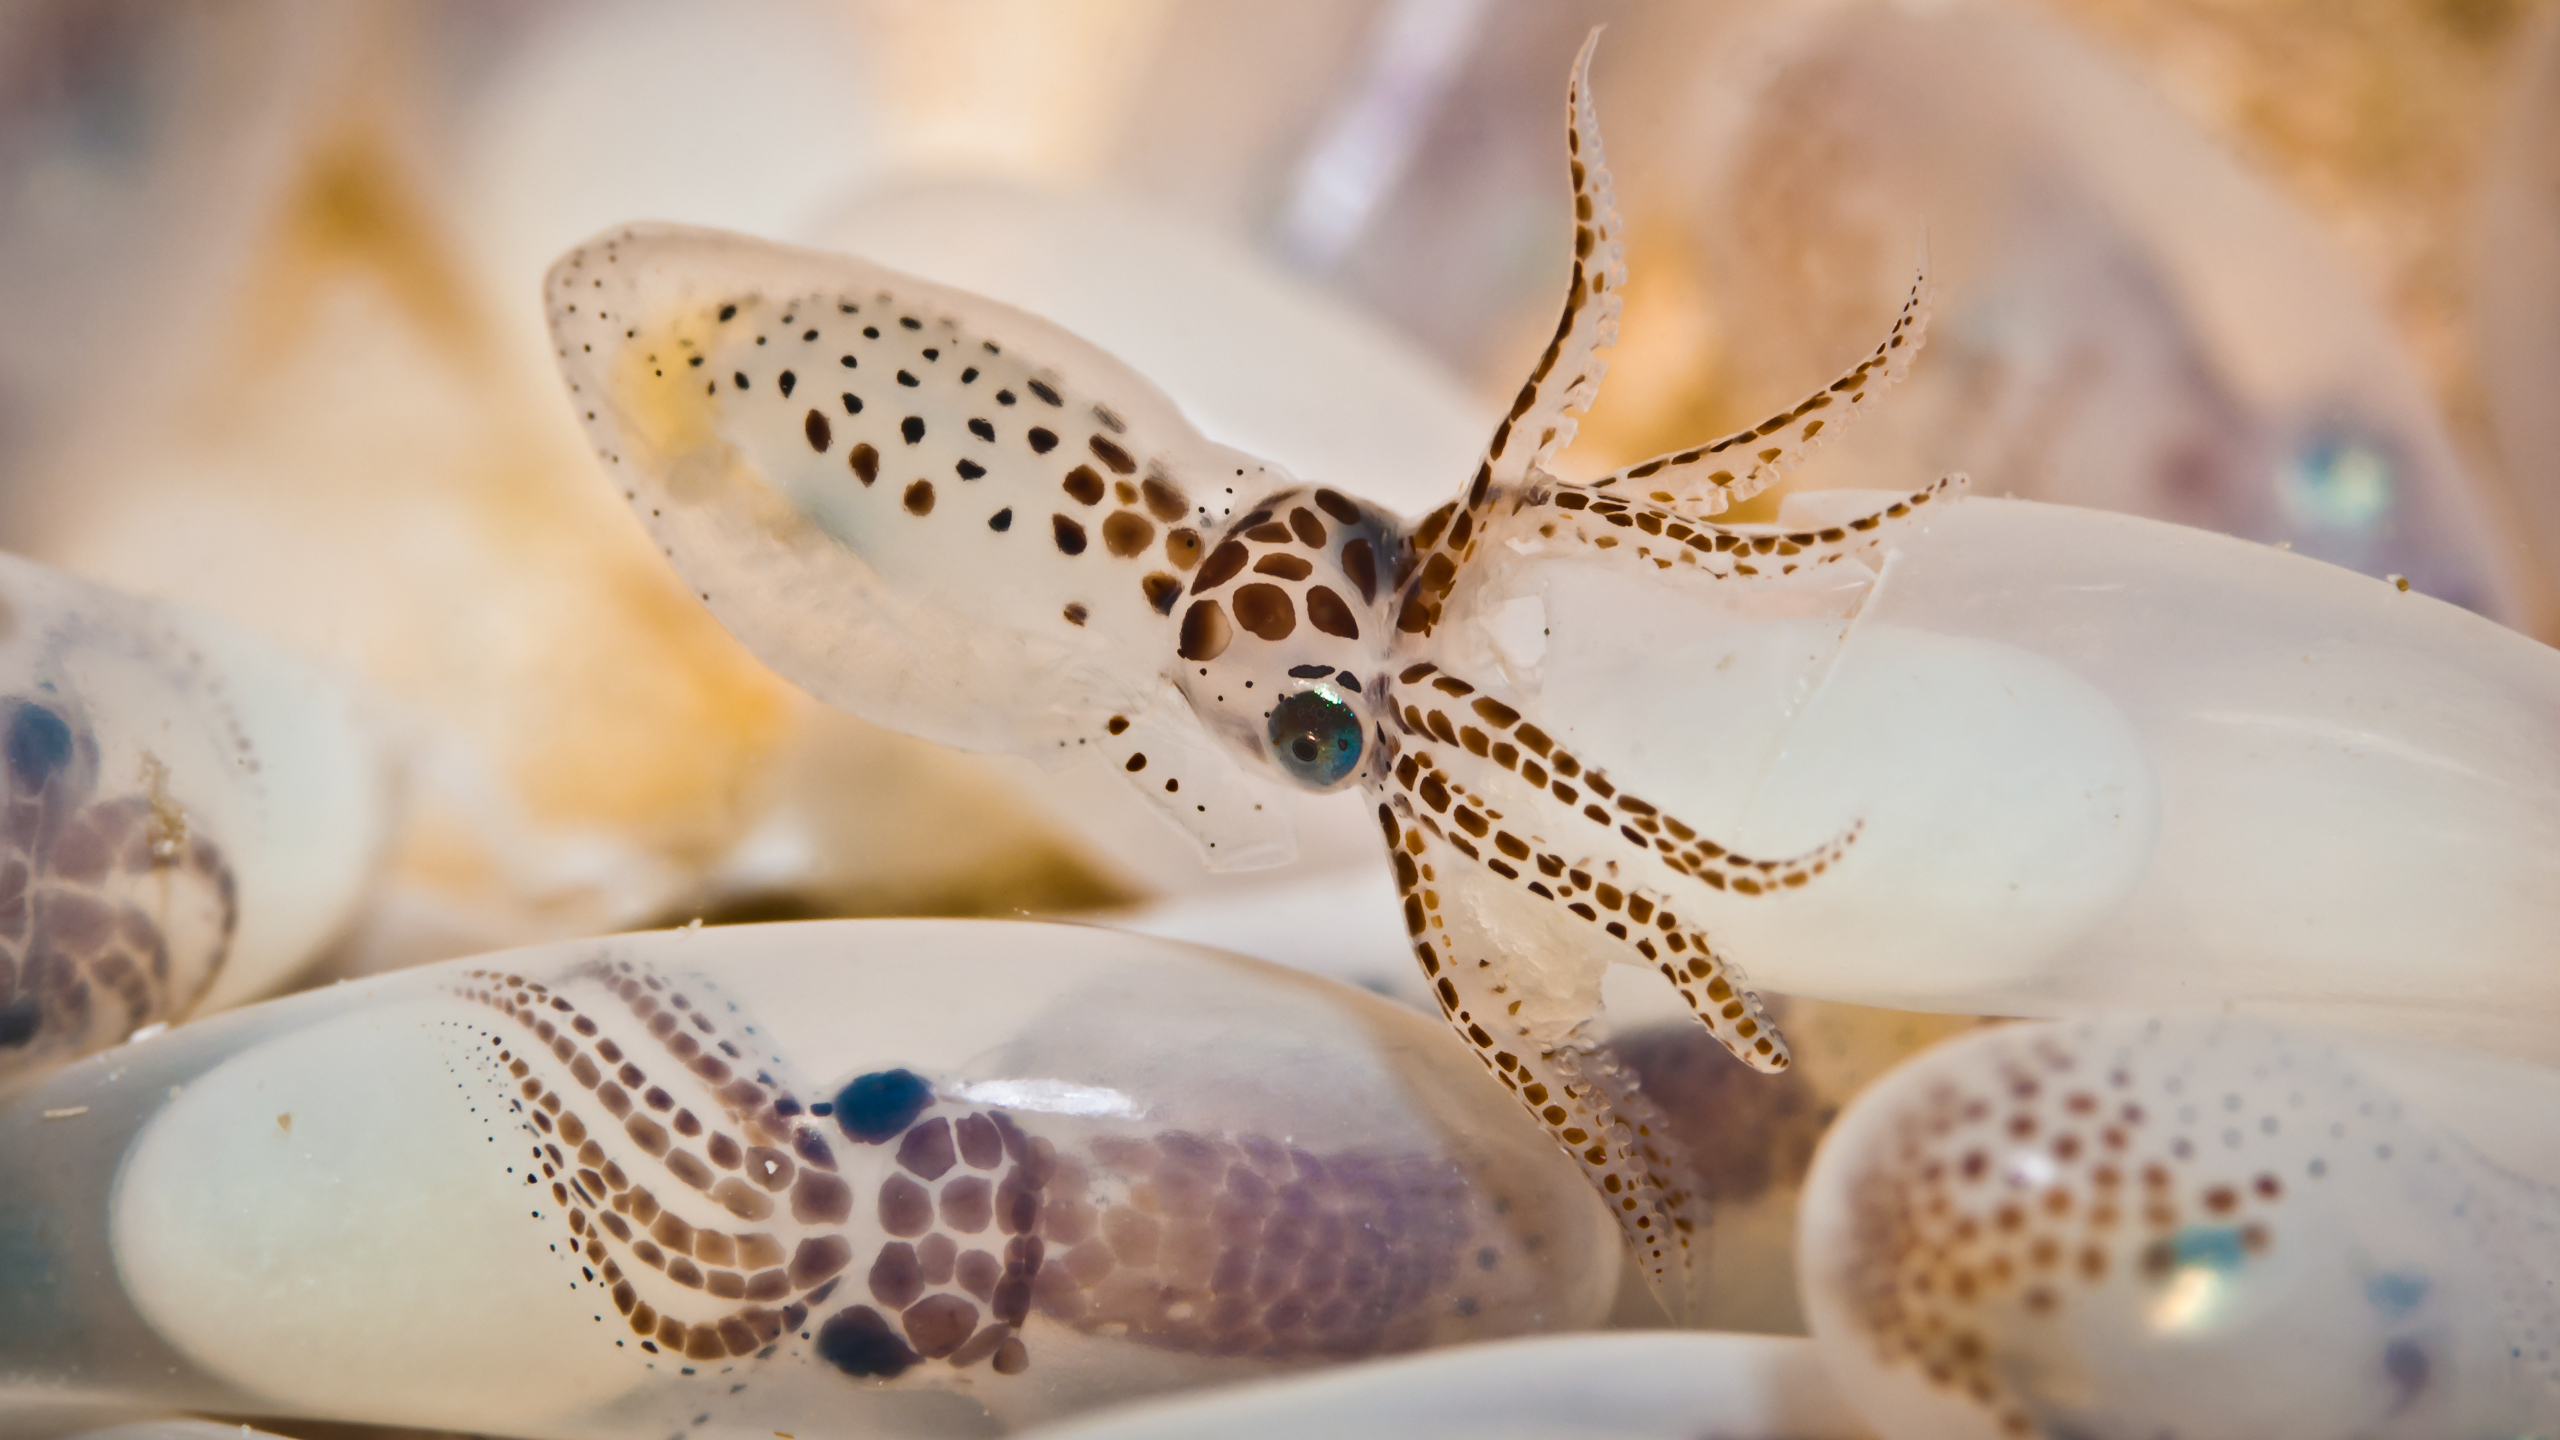 General 2560x1440 octopus eggs nature underwater baby animals